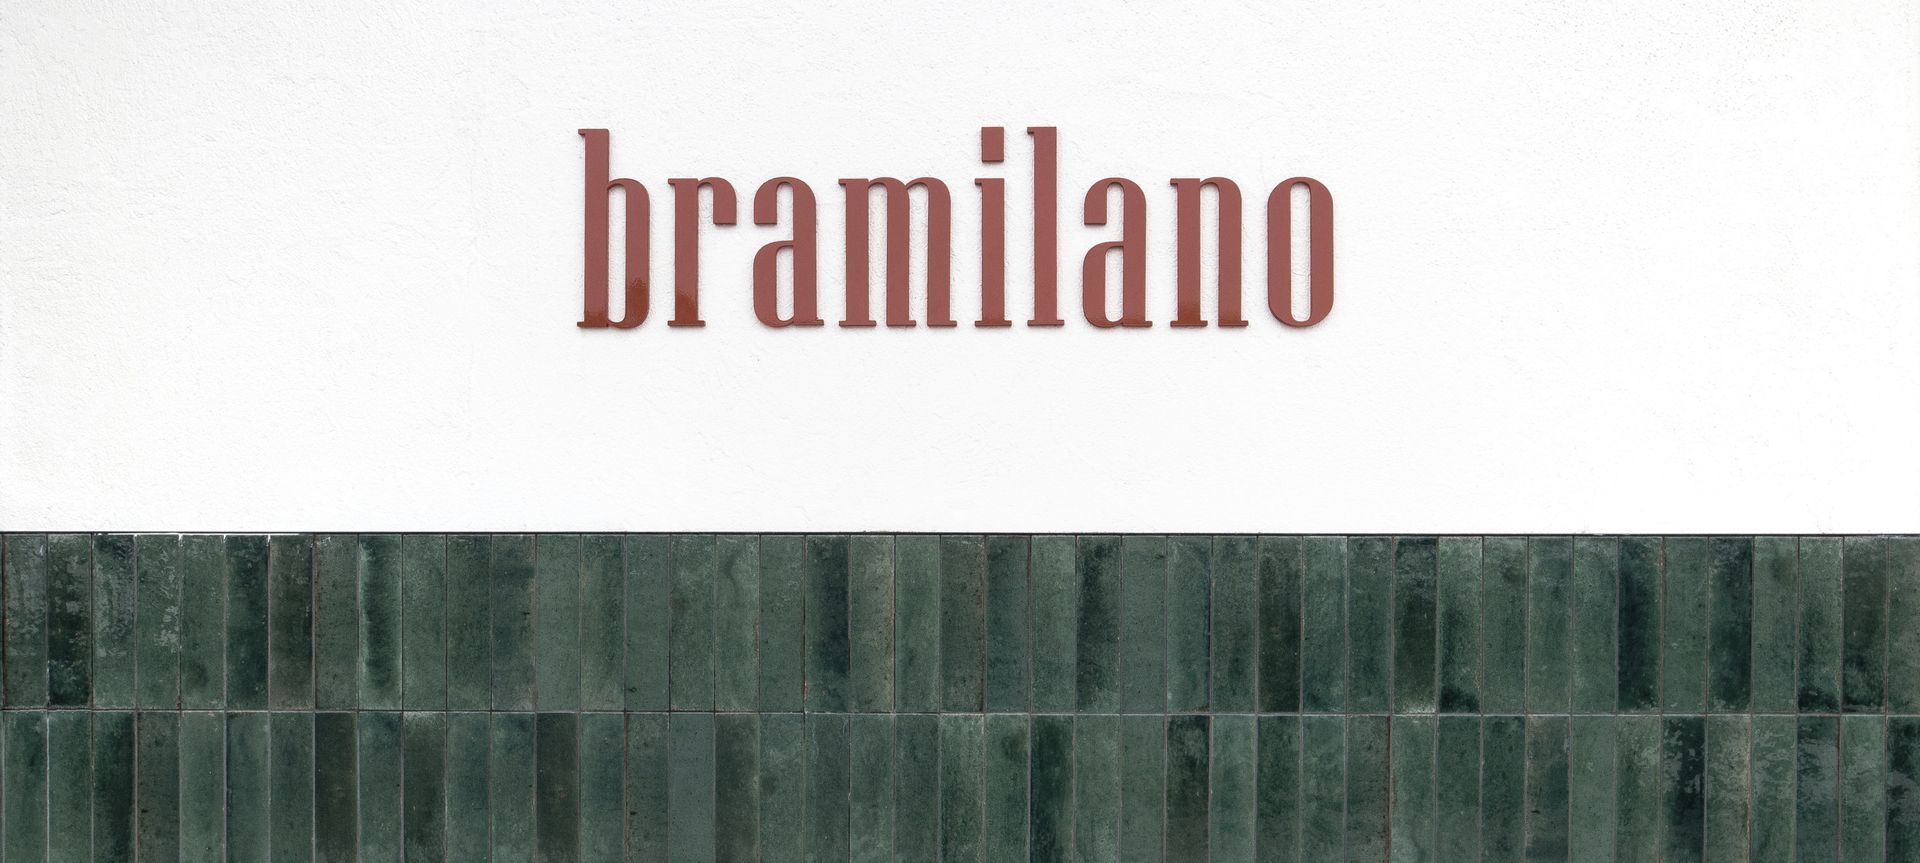 Bramilano banner